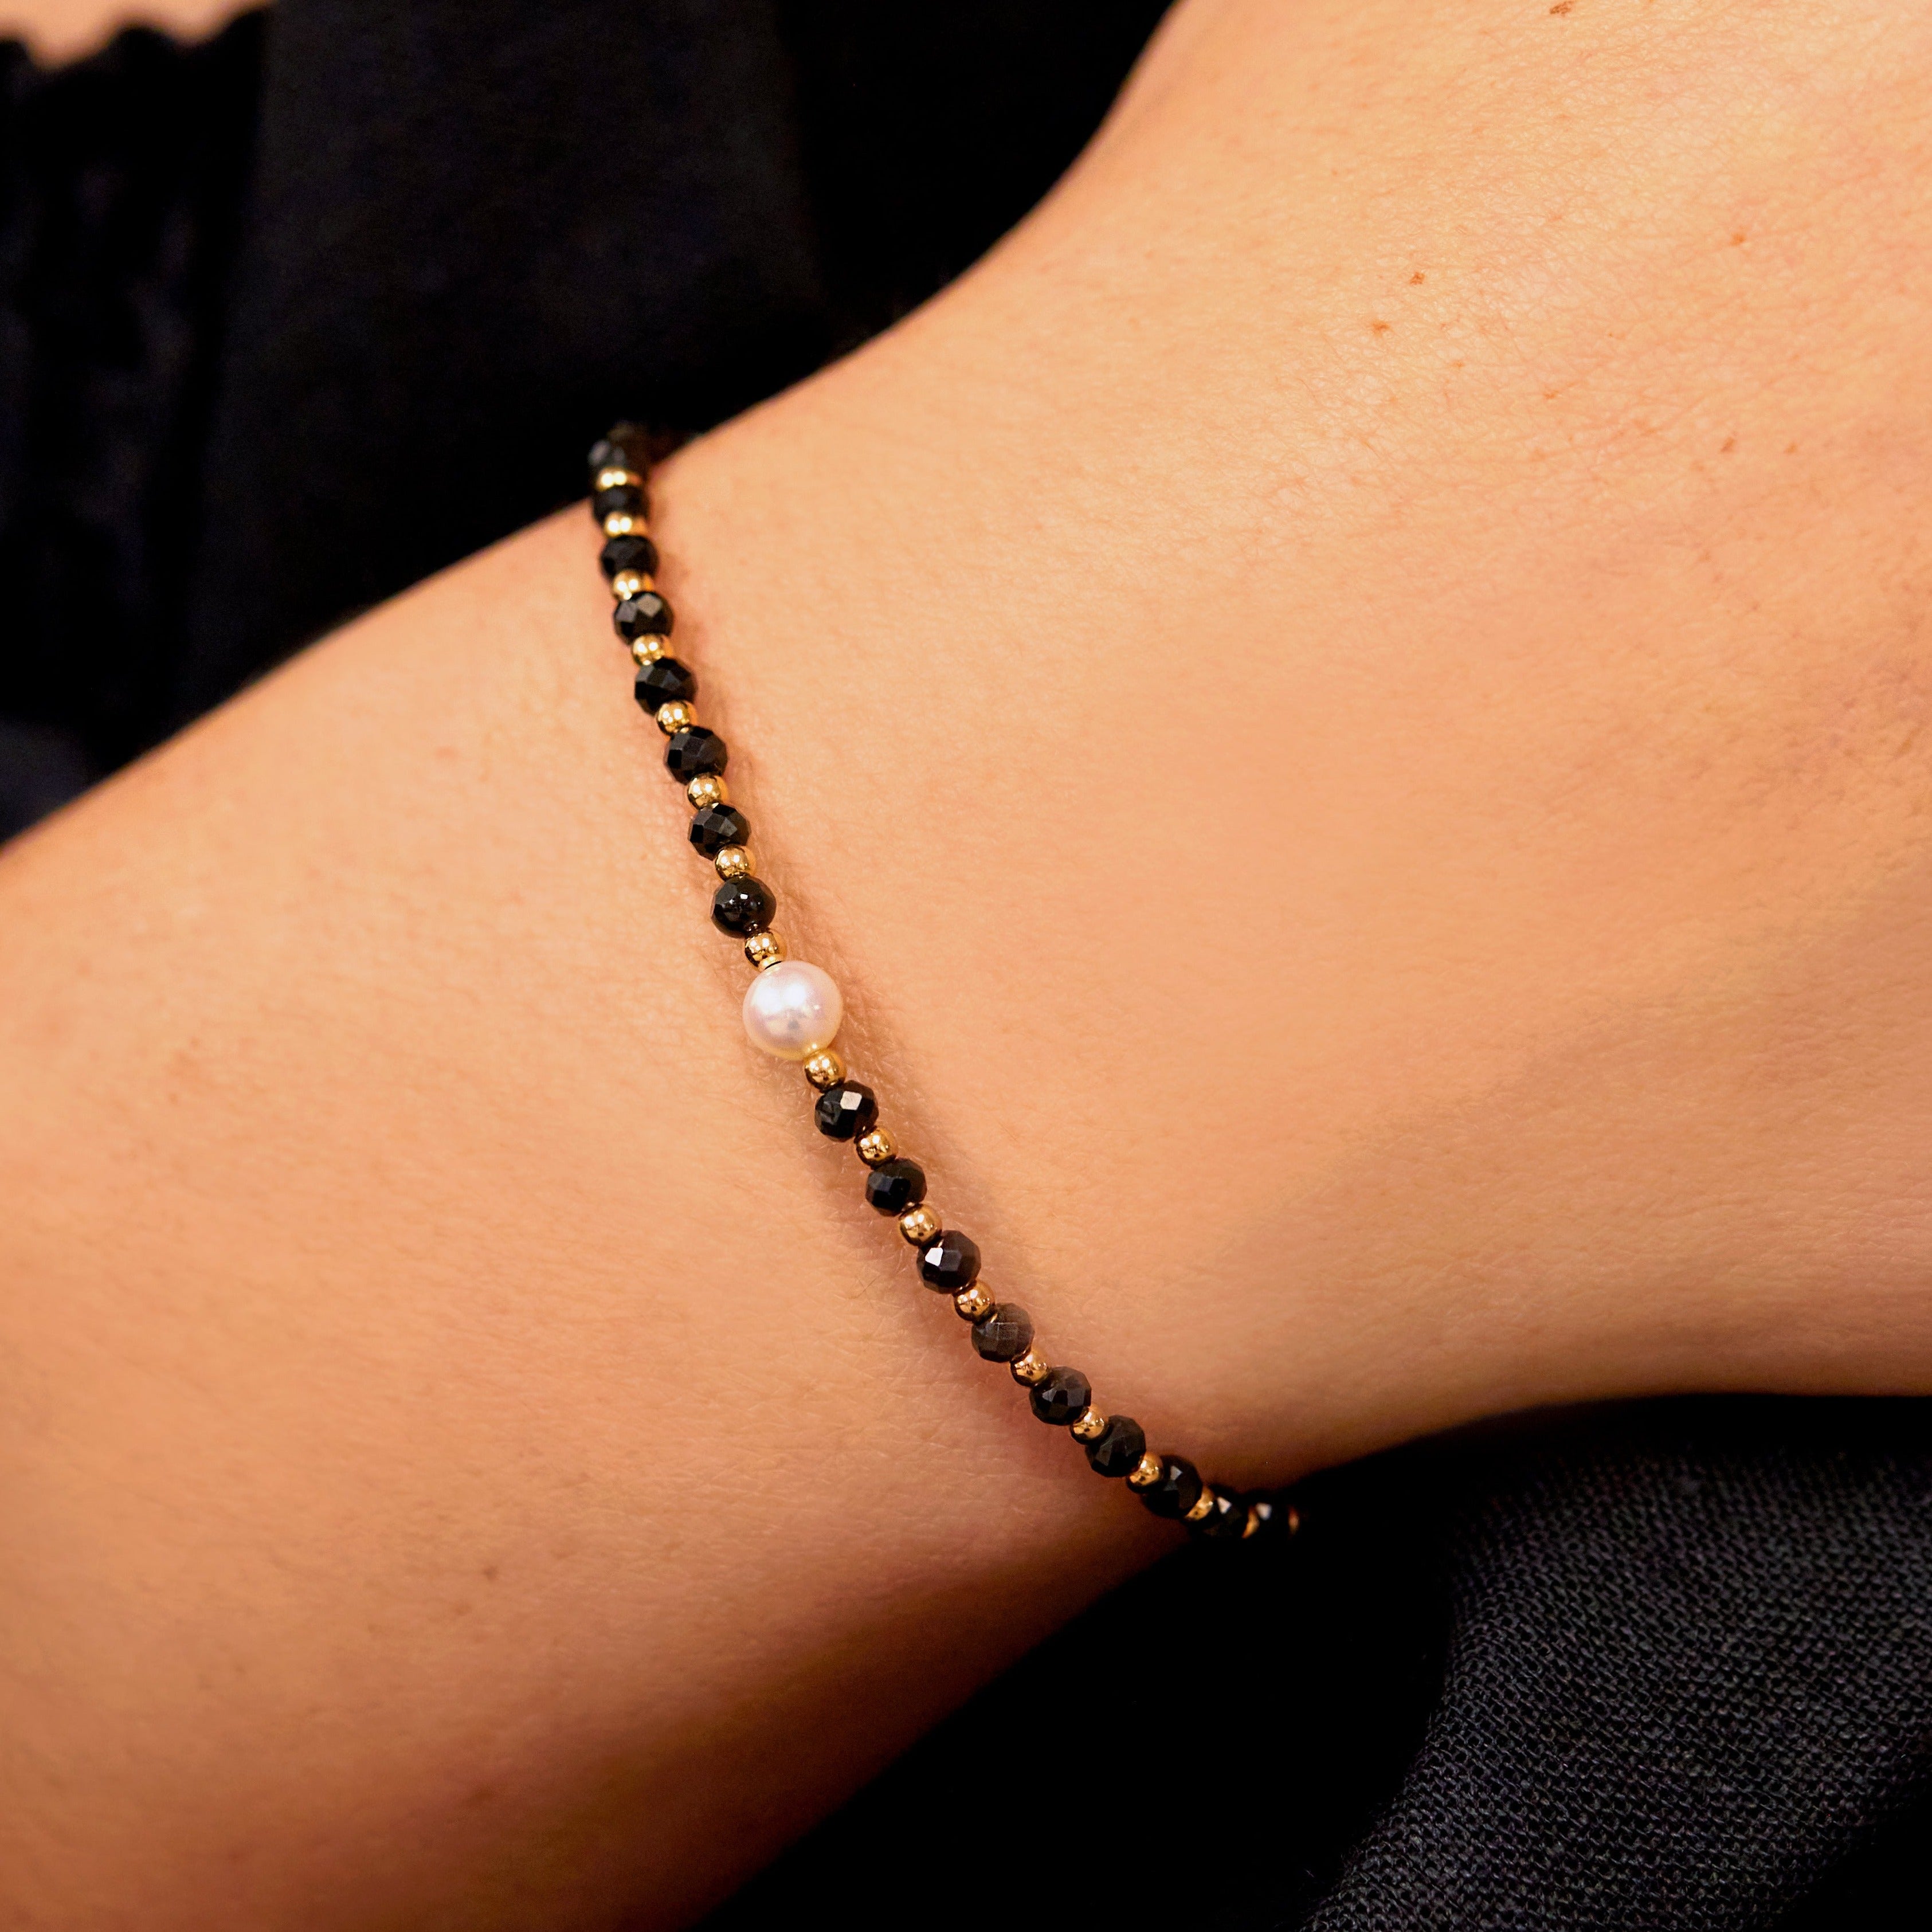 Gold spinel gemstone bracelet close up on a wrist